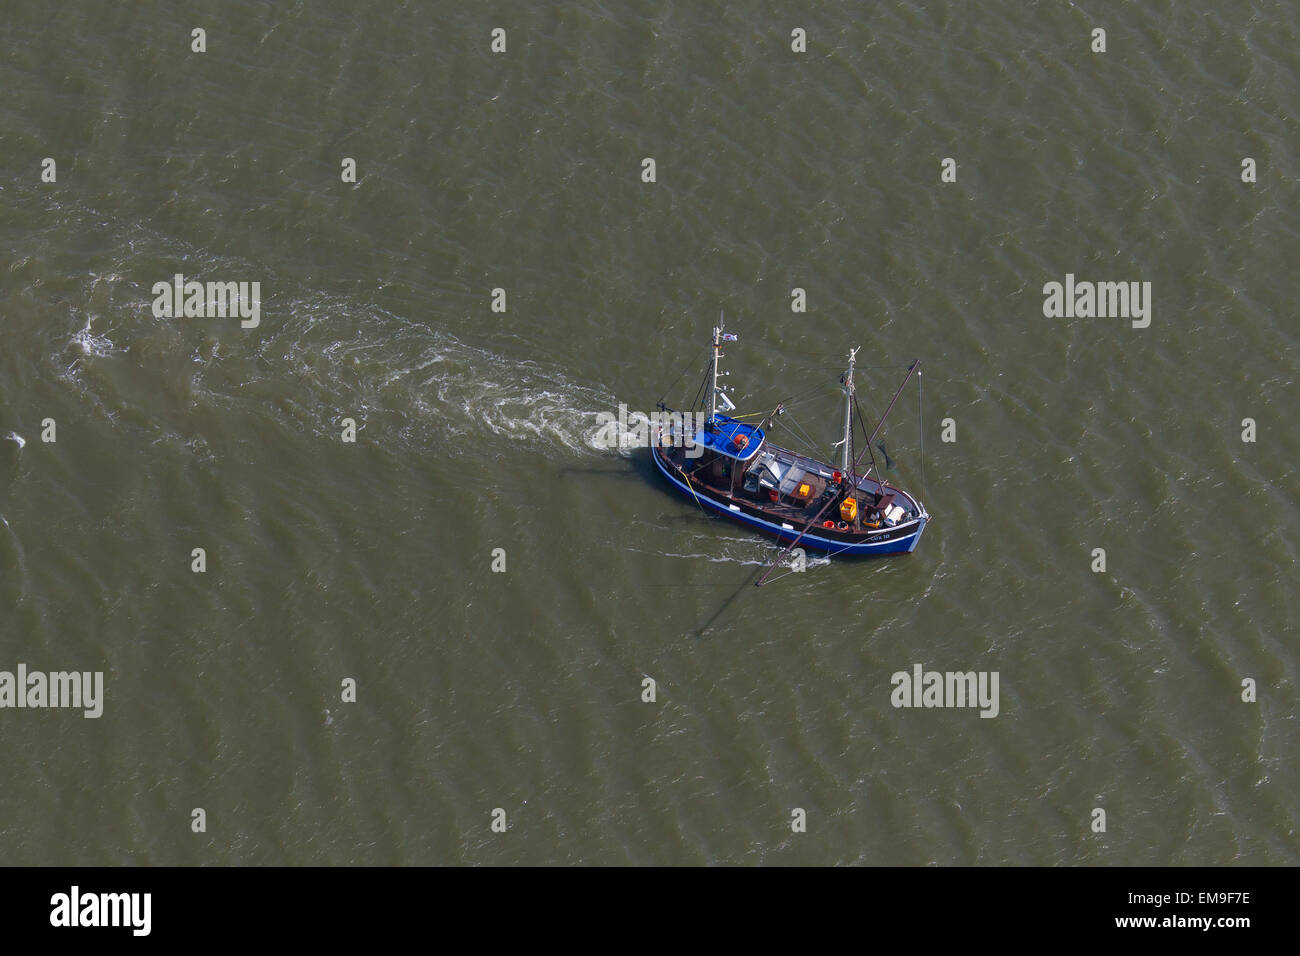 Bird's eye view of blue shrimp trawler boat fishing for shrimps at sea Stock Photo